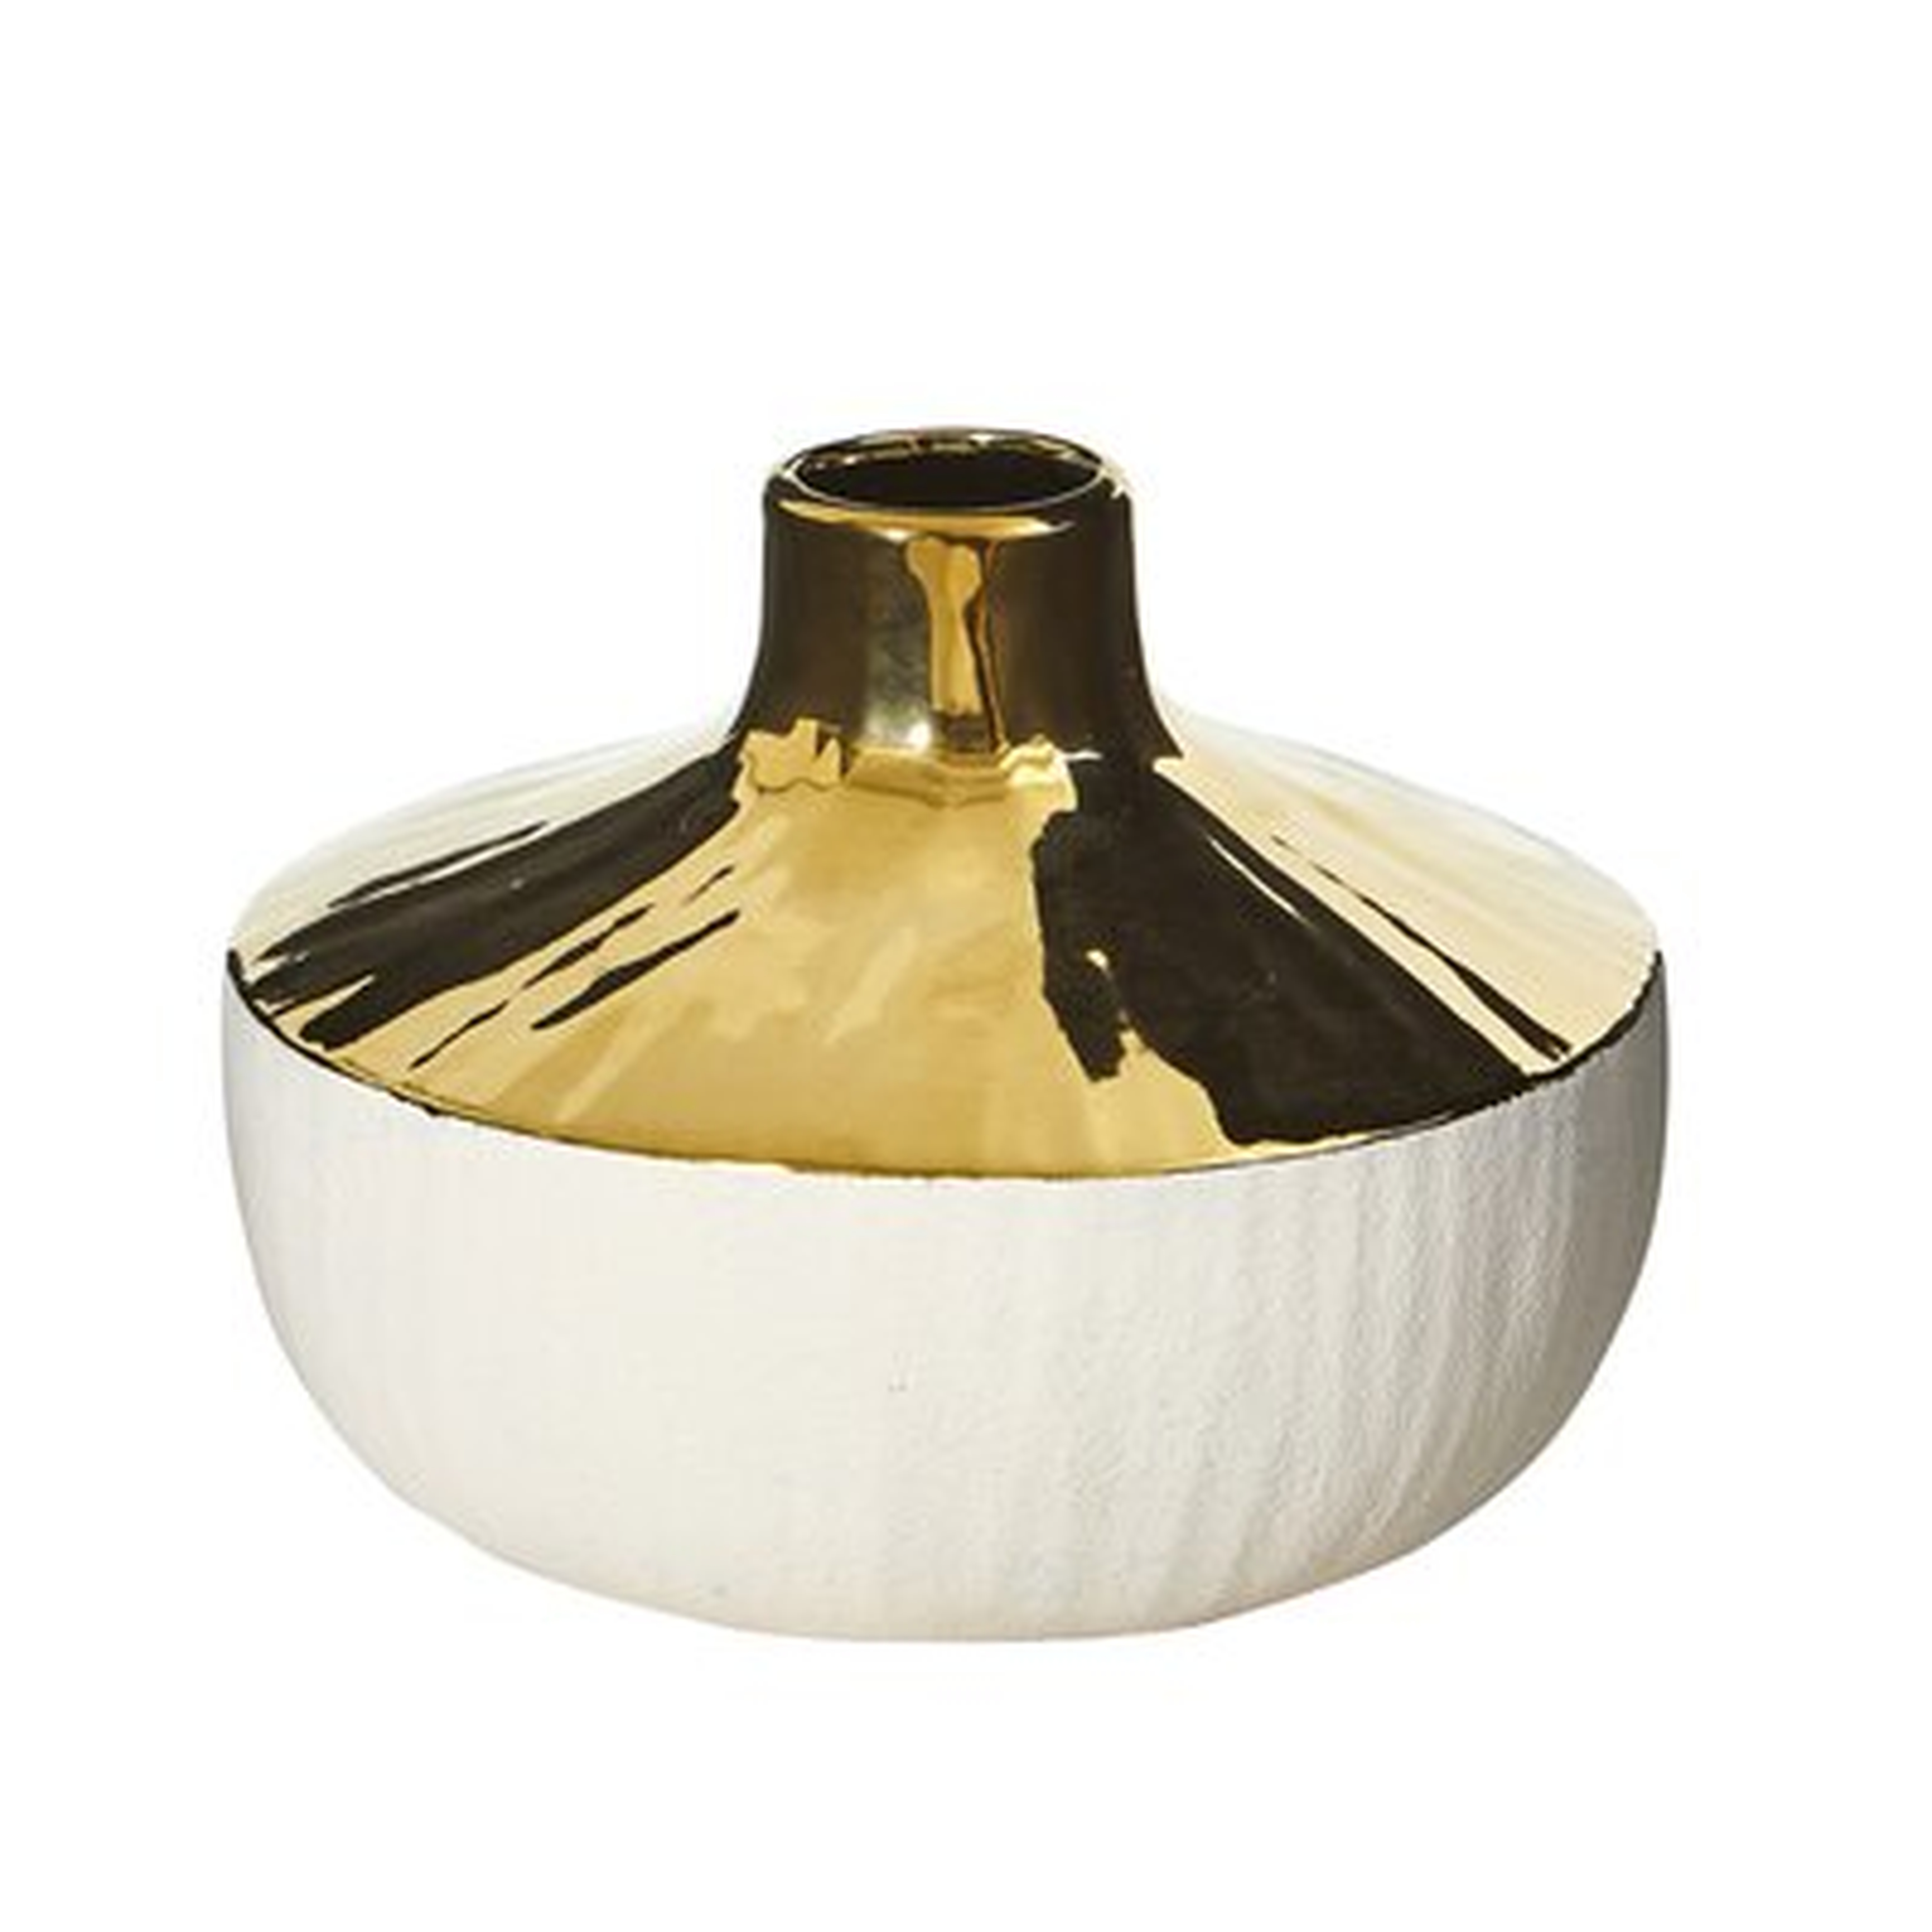 8In. Elegance Ceramic Decorative Vase With Gold Accents - Wayfair